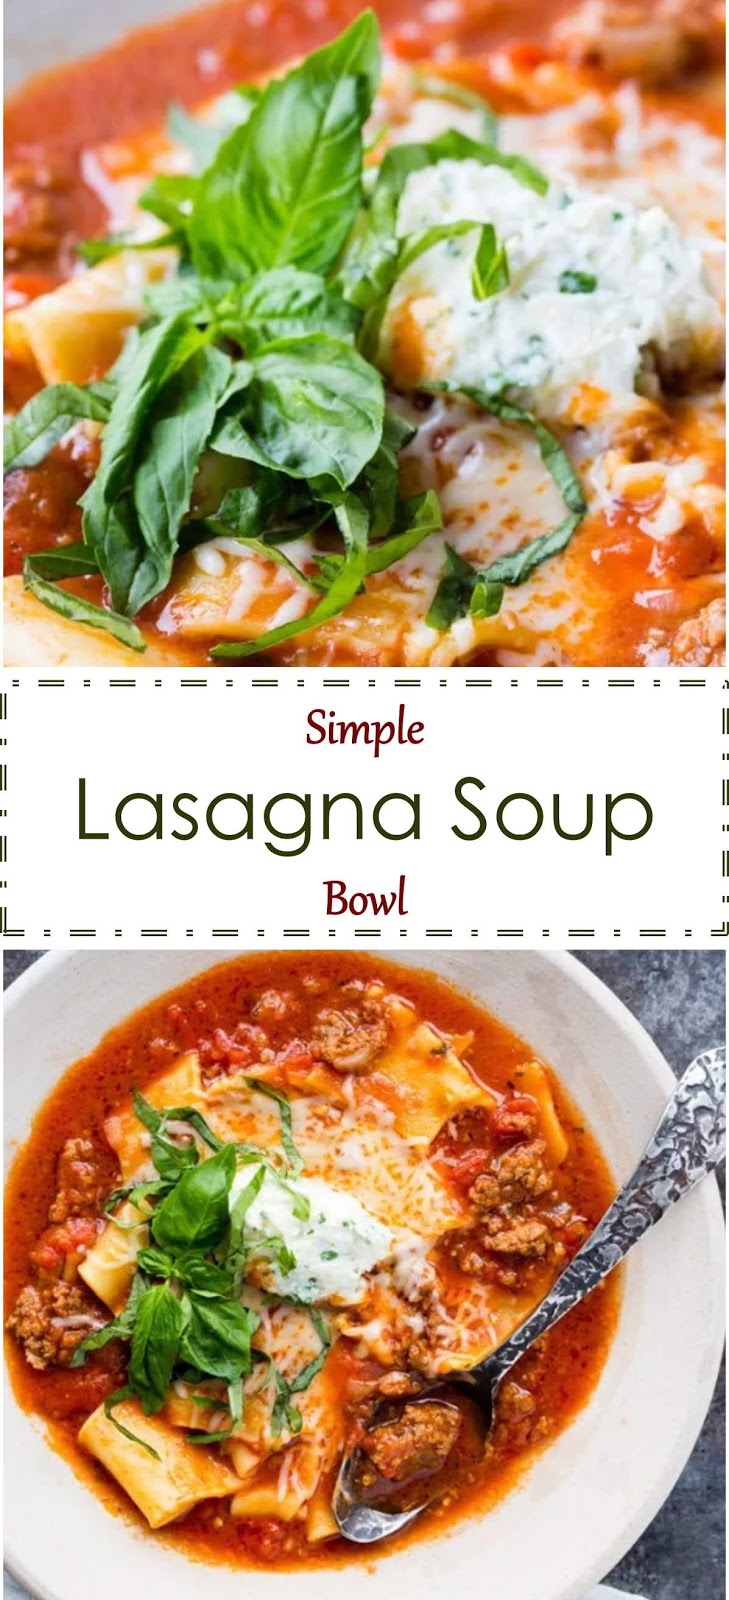 2124 Reviews: My BEST #Recipes >> Simple Bowl #Lasagna Soup - #mgid ...